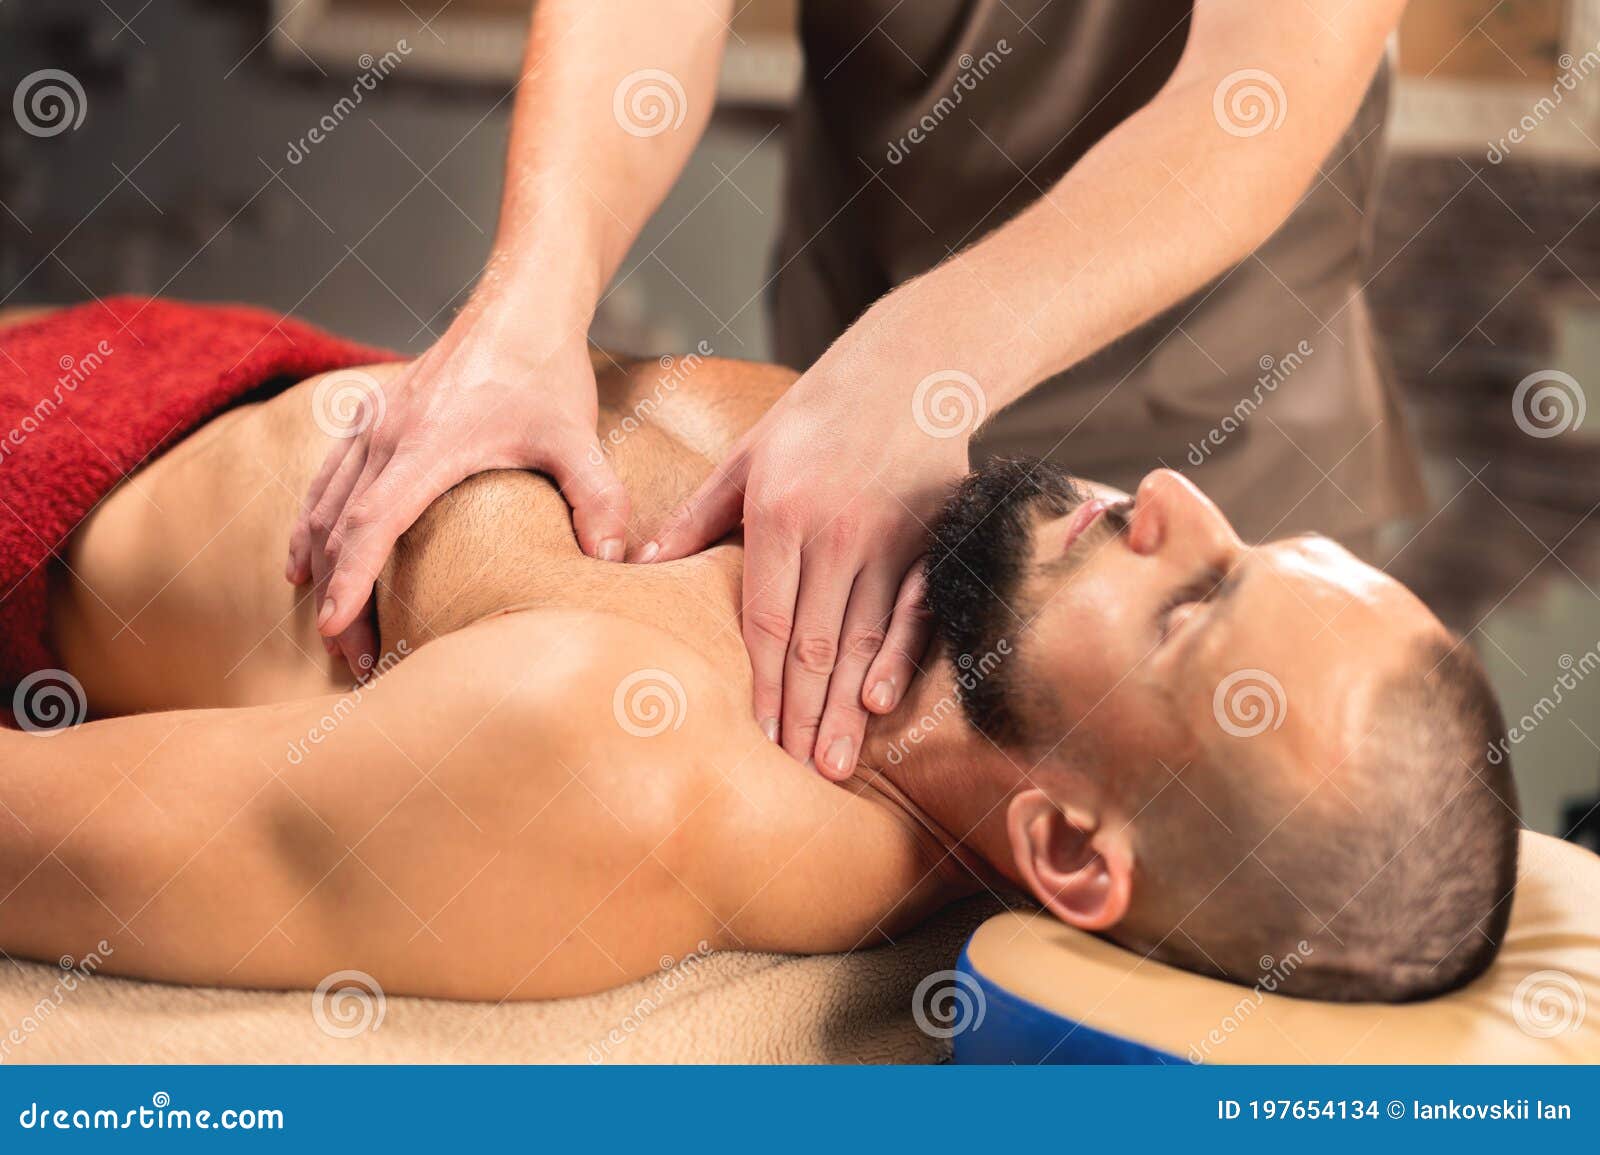 испанский массаж грудью фото 65